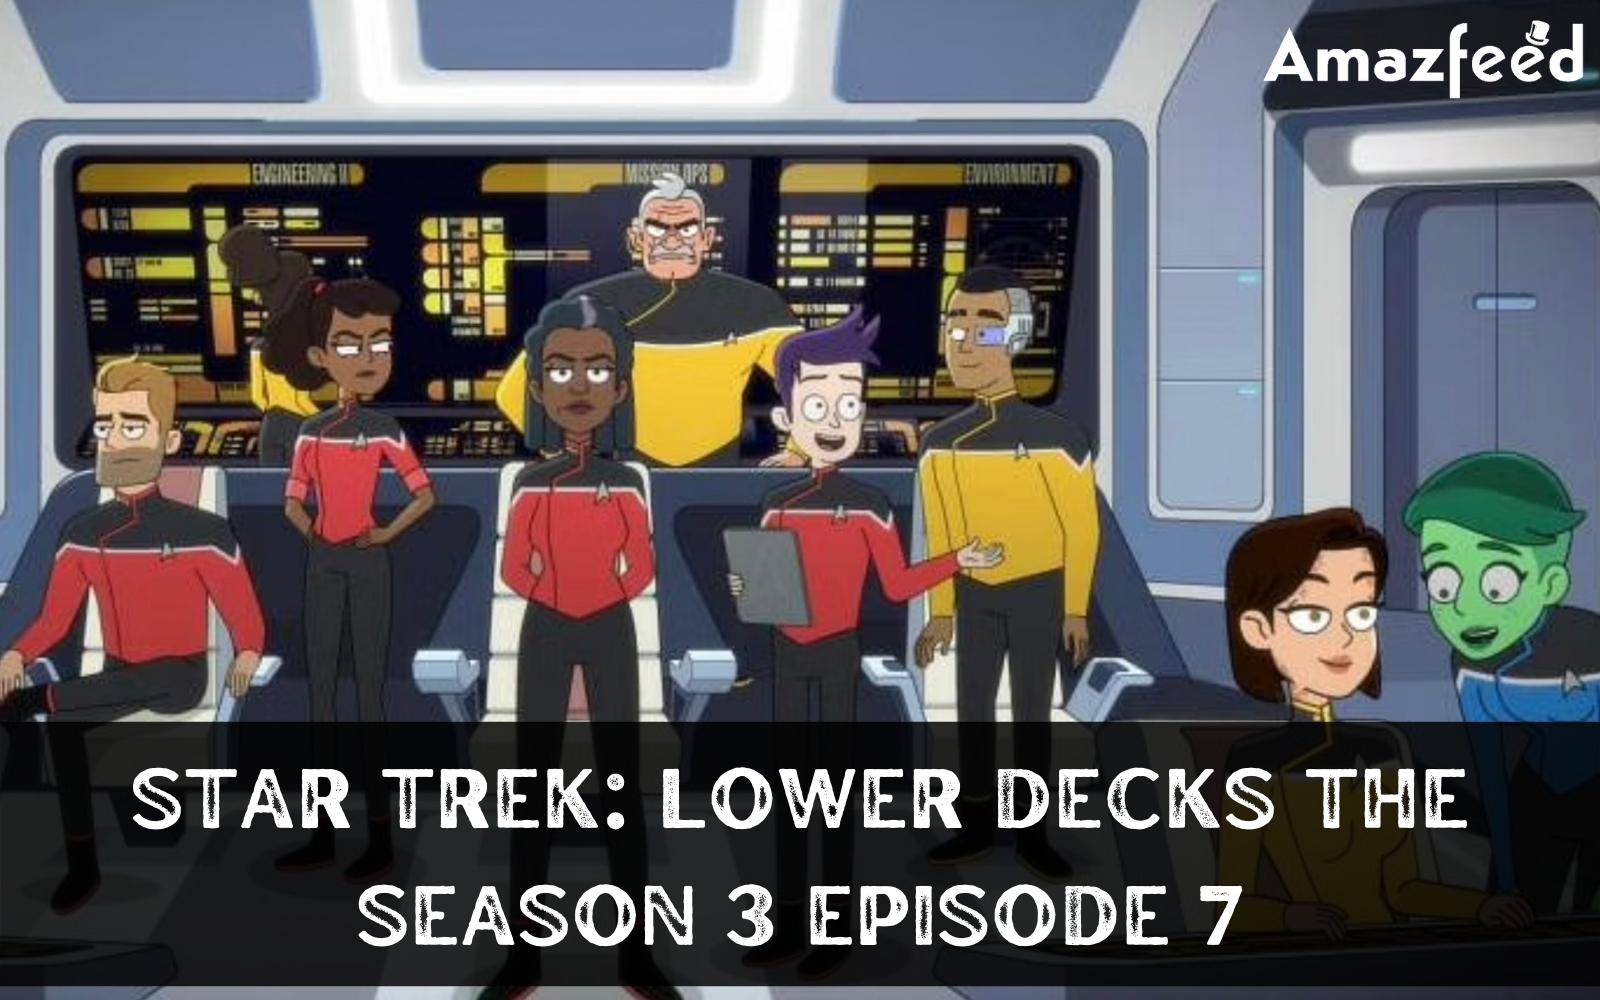 Star Trek: Lower Decks Season 3 Episode 7 : Countdown, Release Date, Spoiler, Recap, & Where to Watch